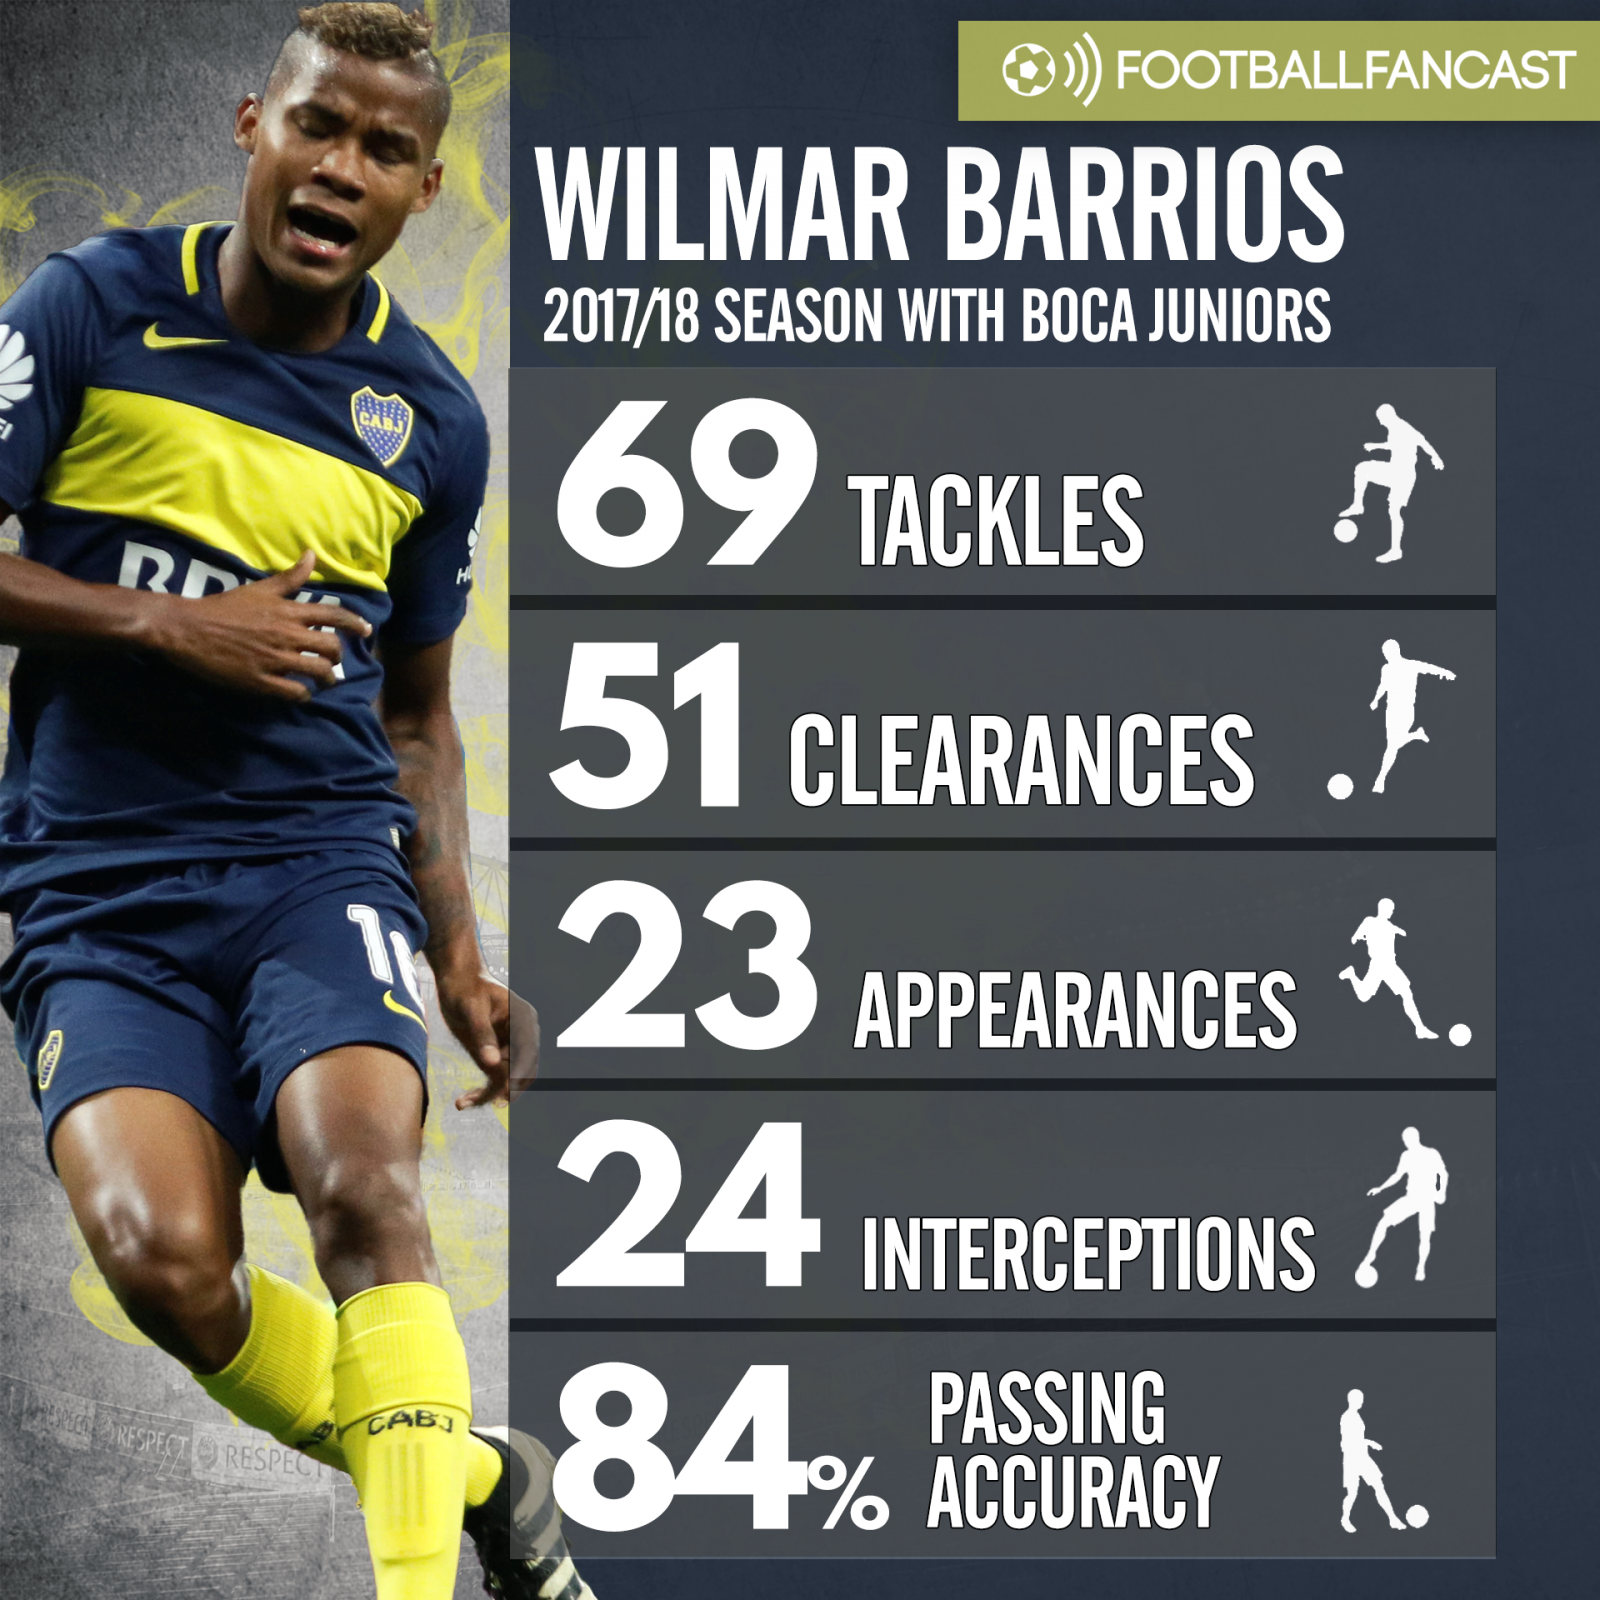 Wilmar Barrios' Boca Juniors season stats